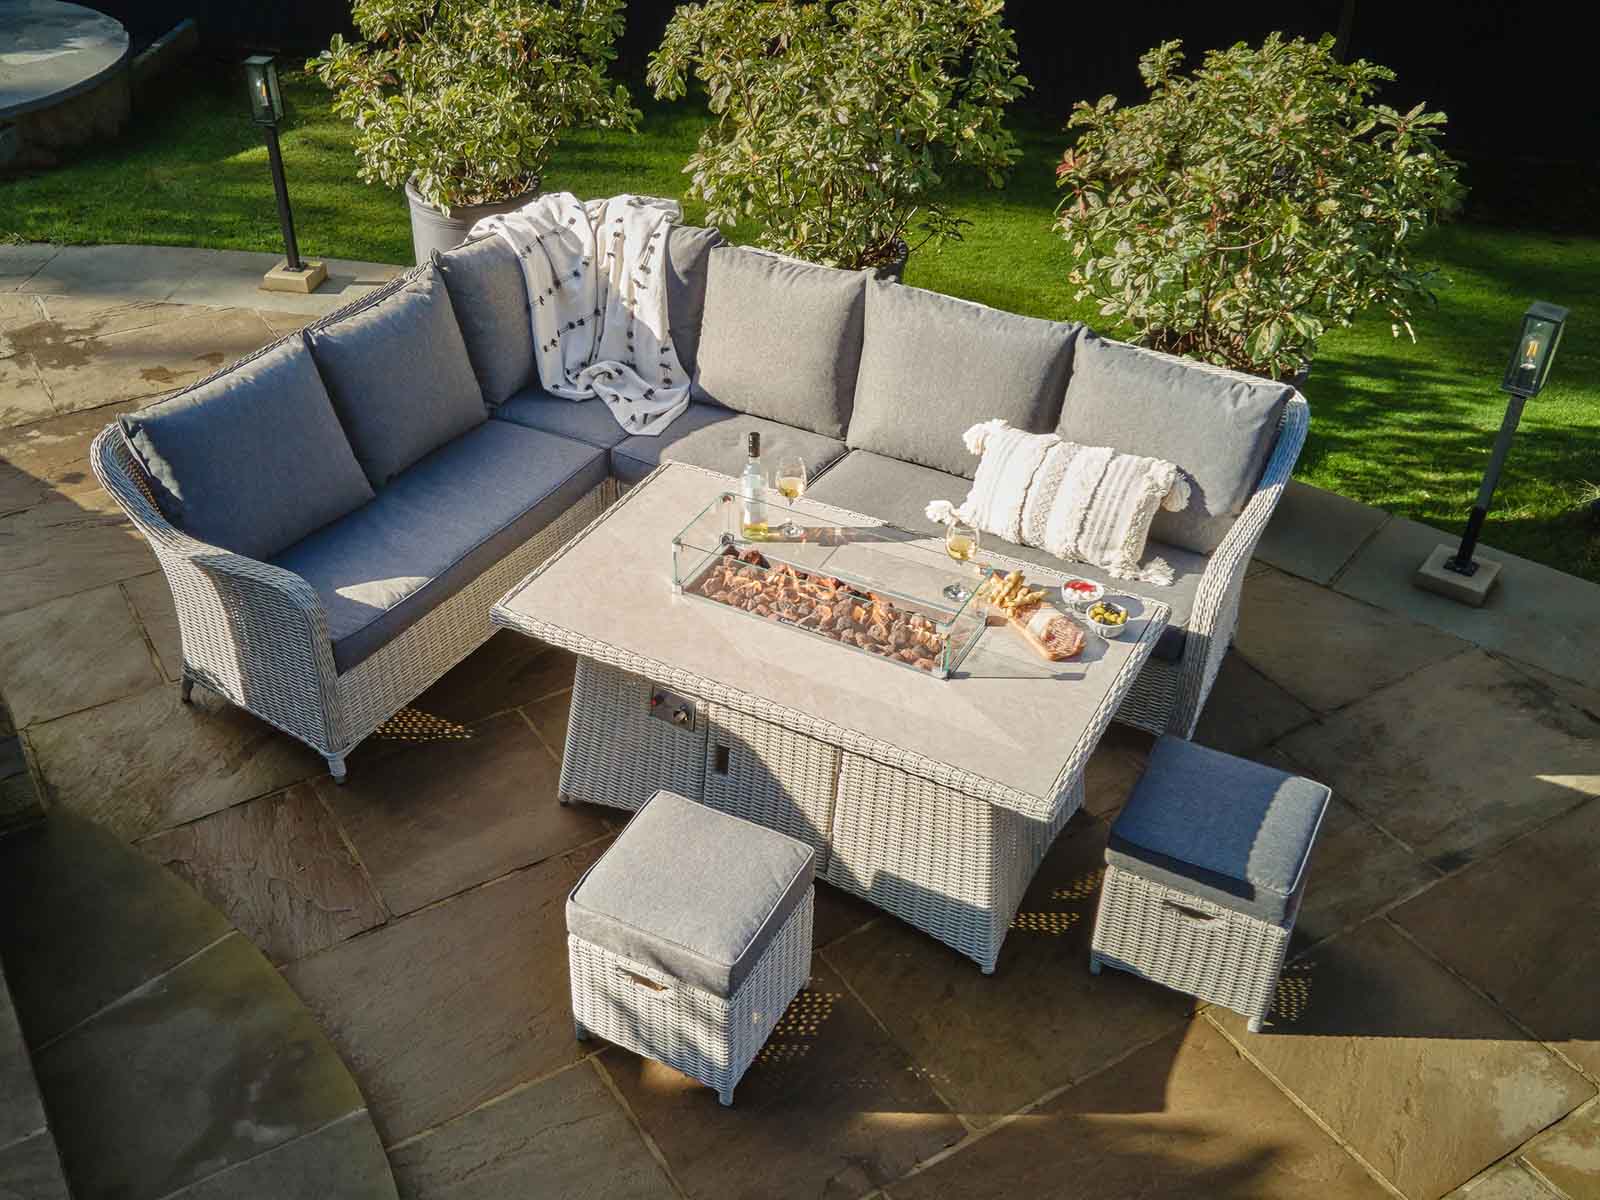 Sumatra Grey Rattan Effect Garden Corner Sofa Set with Fire Pit Ceramic Top Table – Click Style